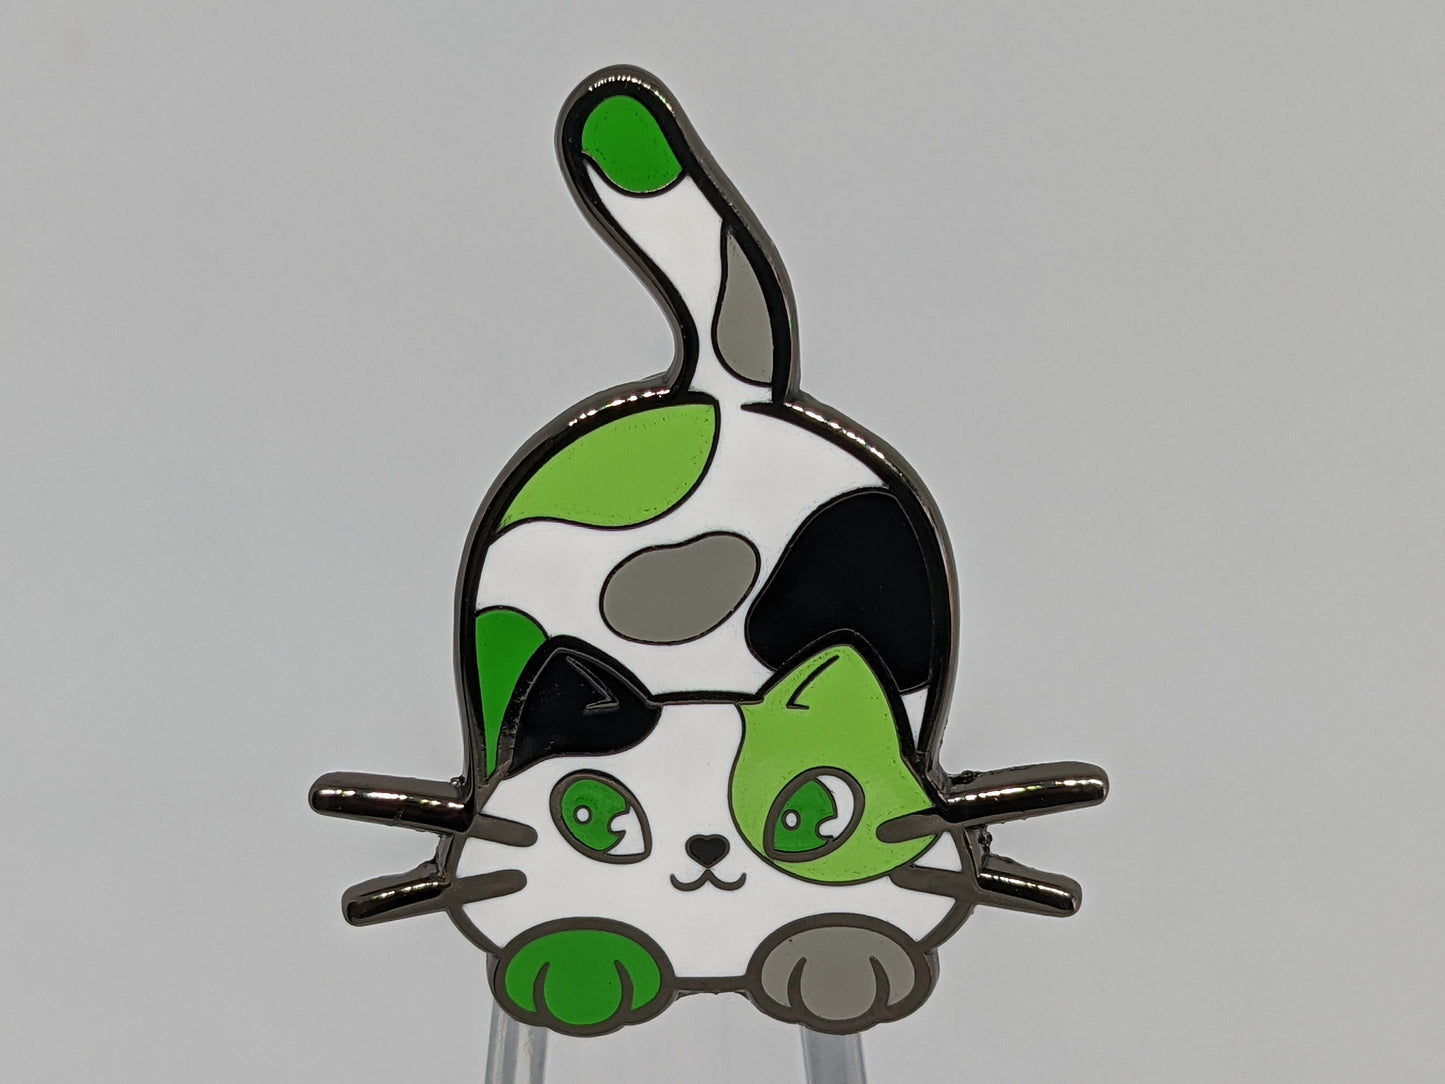 Aromantic Pin Purride Chibi Cat Hard Enamel Pin in Subtle Aro Pride Flag Colors | LGBTQ+ Aromantic Subtle Pride Jewelry